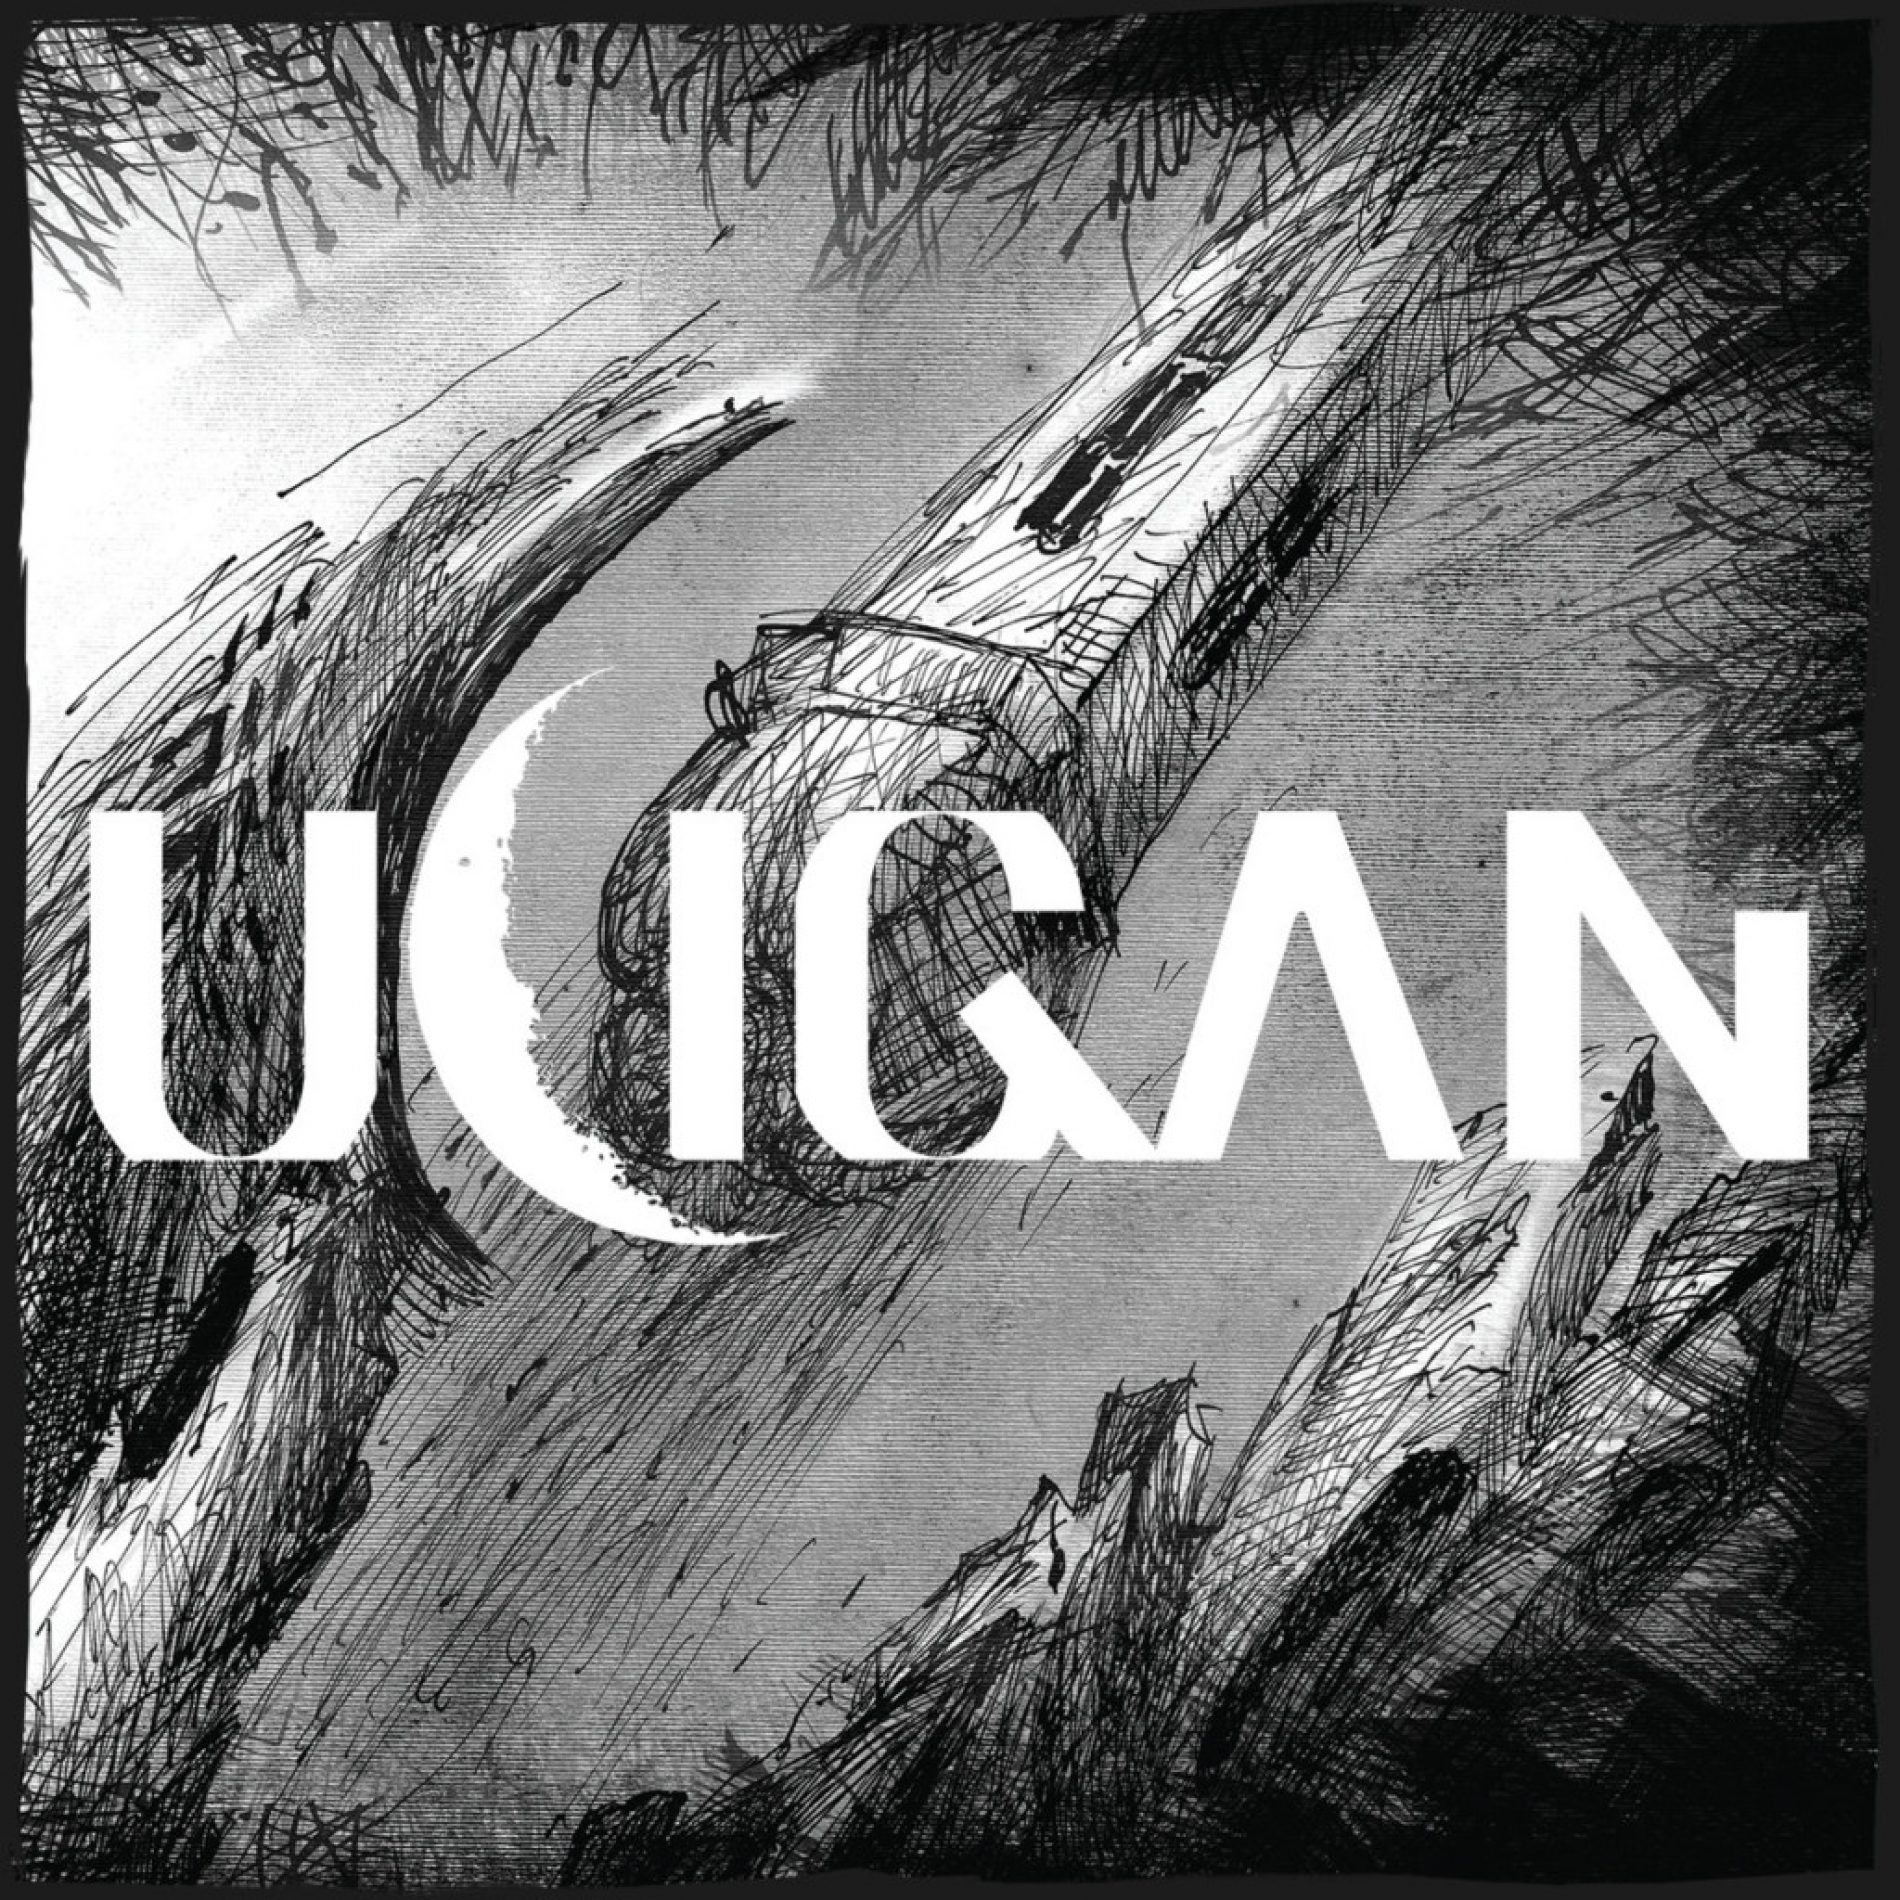 Asculta integral primul album al trupei de sludge/black metal Ucigan